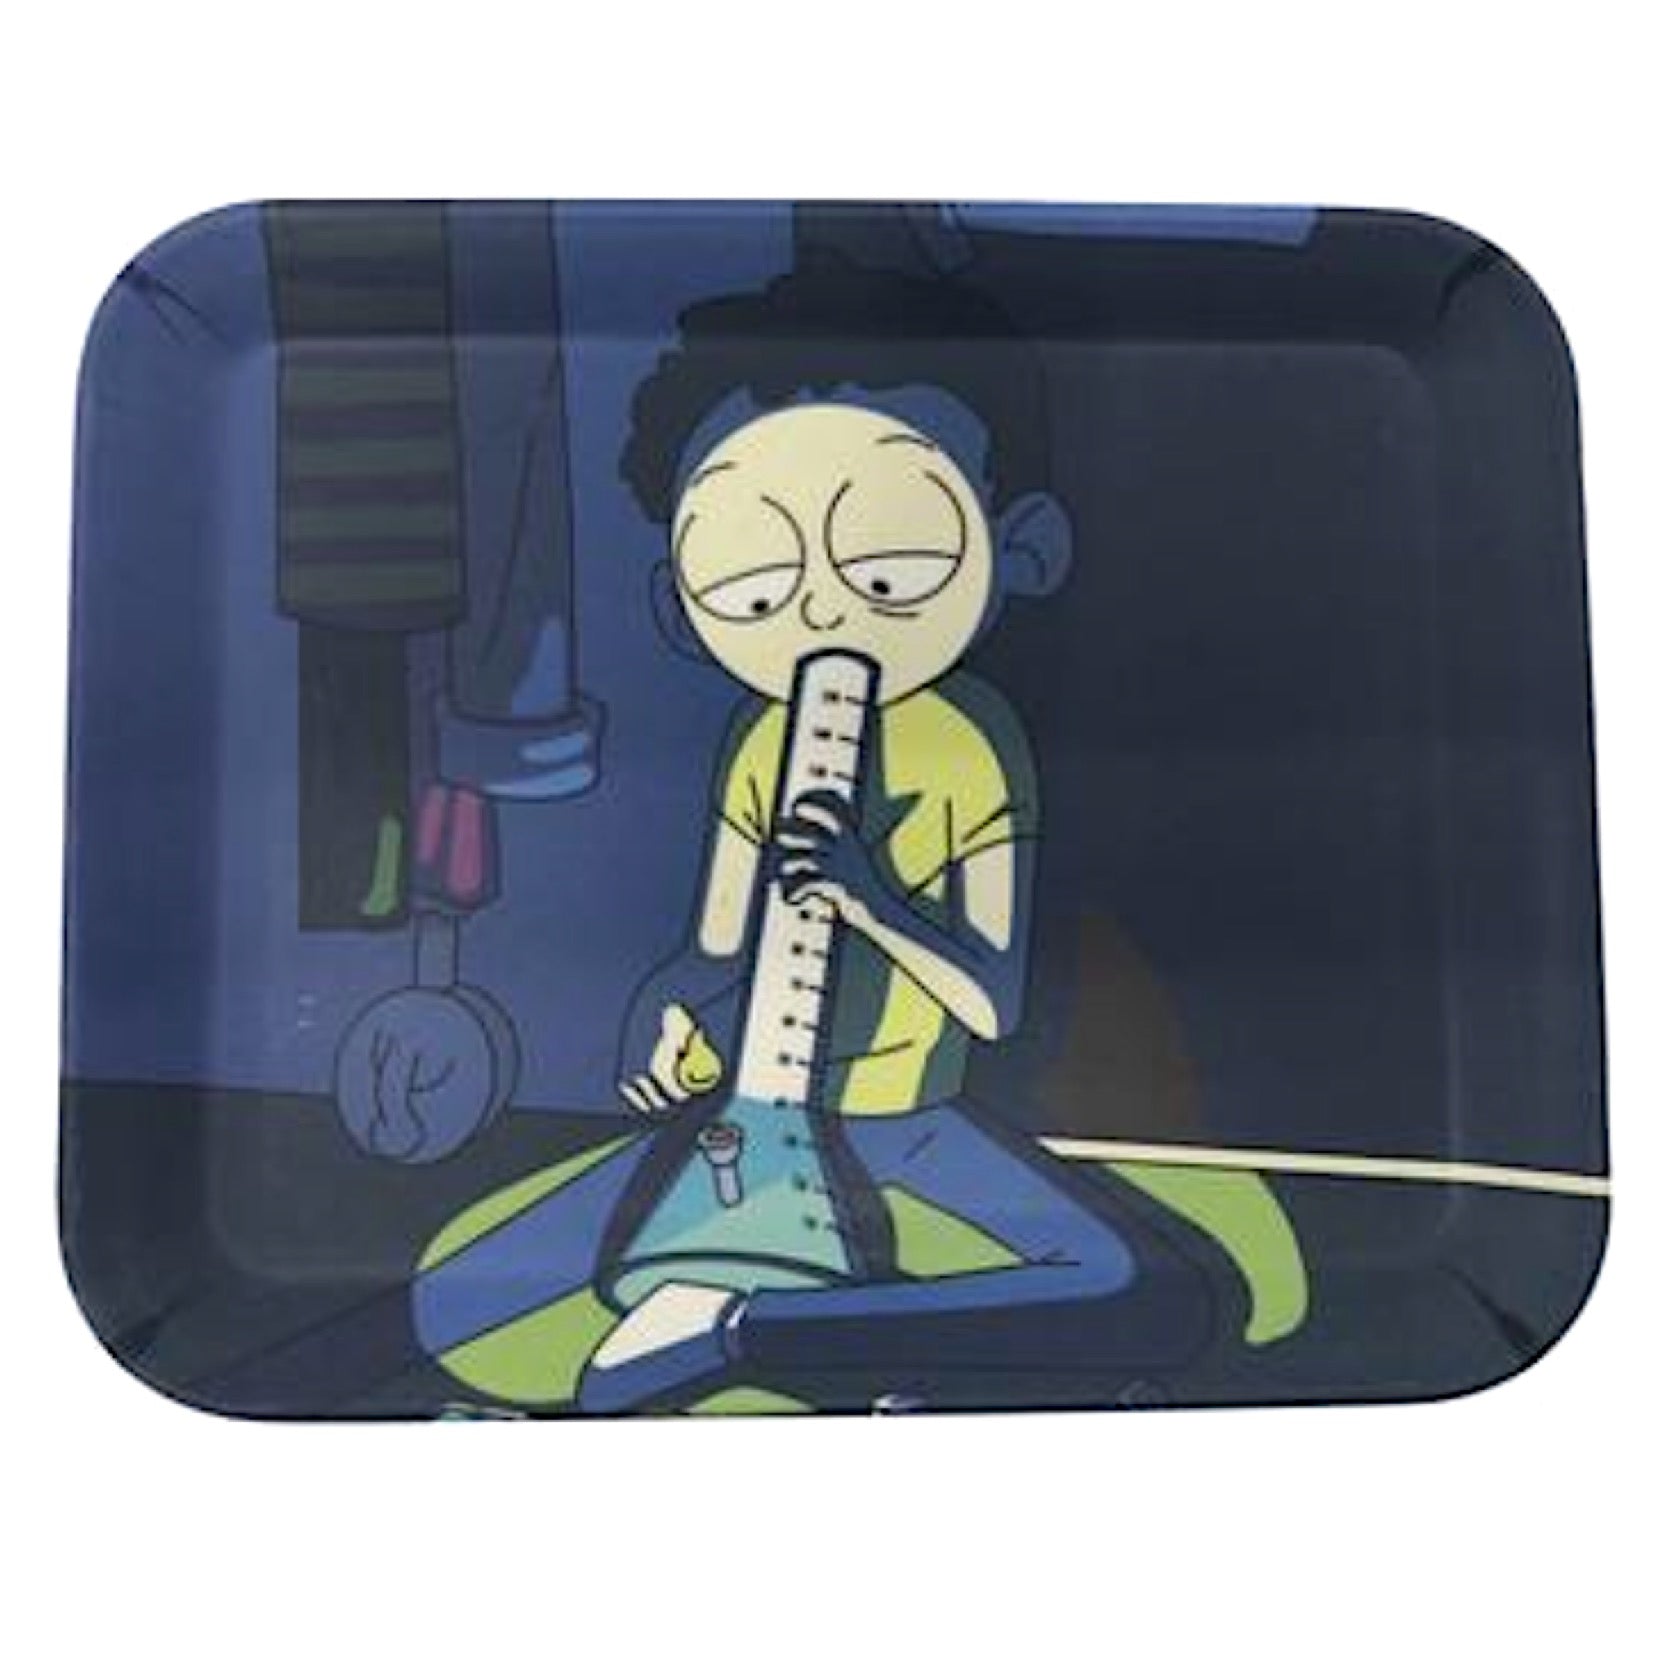 Rick & Morty Limited Edition “Mini Morbid” Rolling Tray (7.5 x 6) by Mission Dispensary | Mission Dispensary